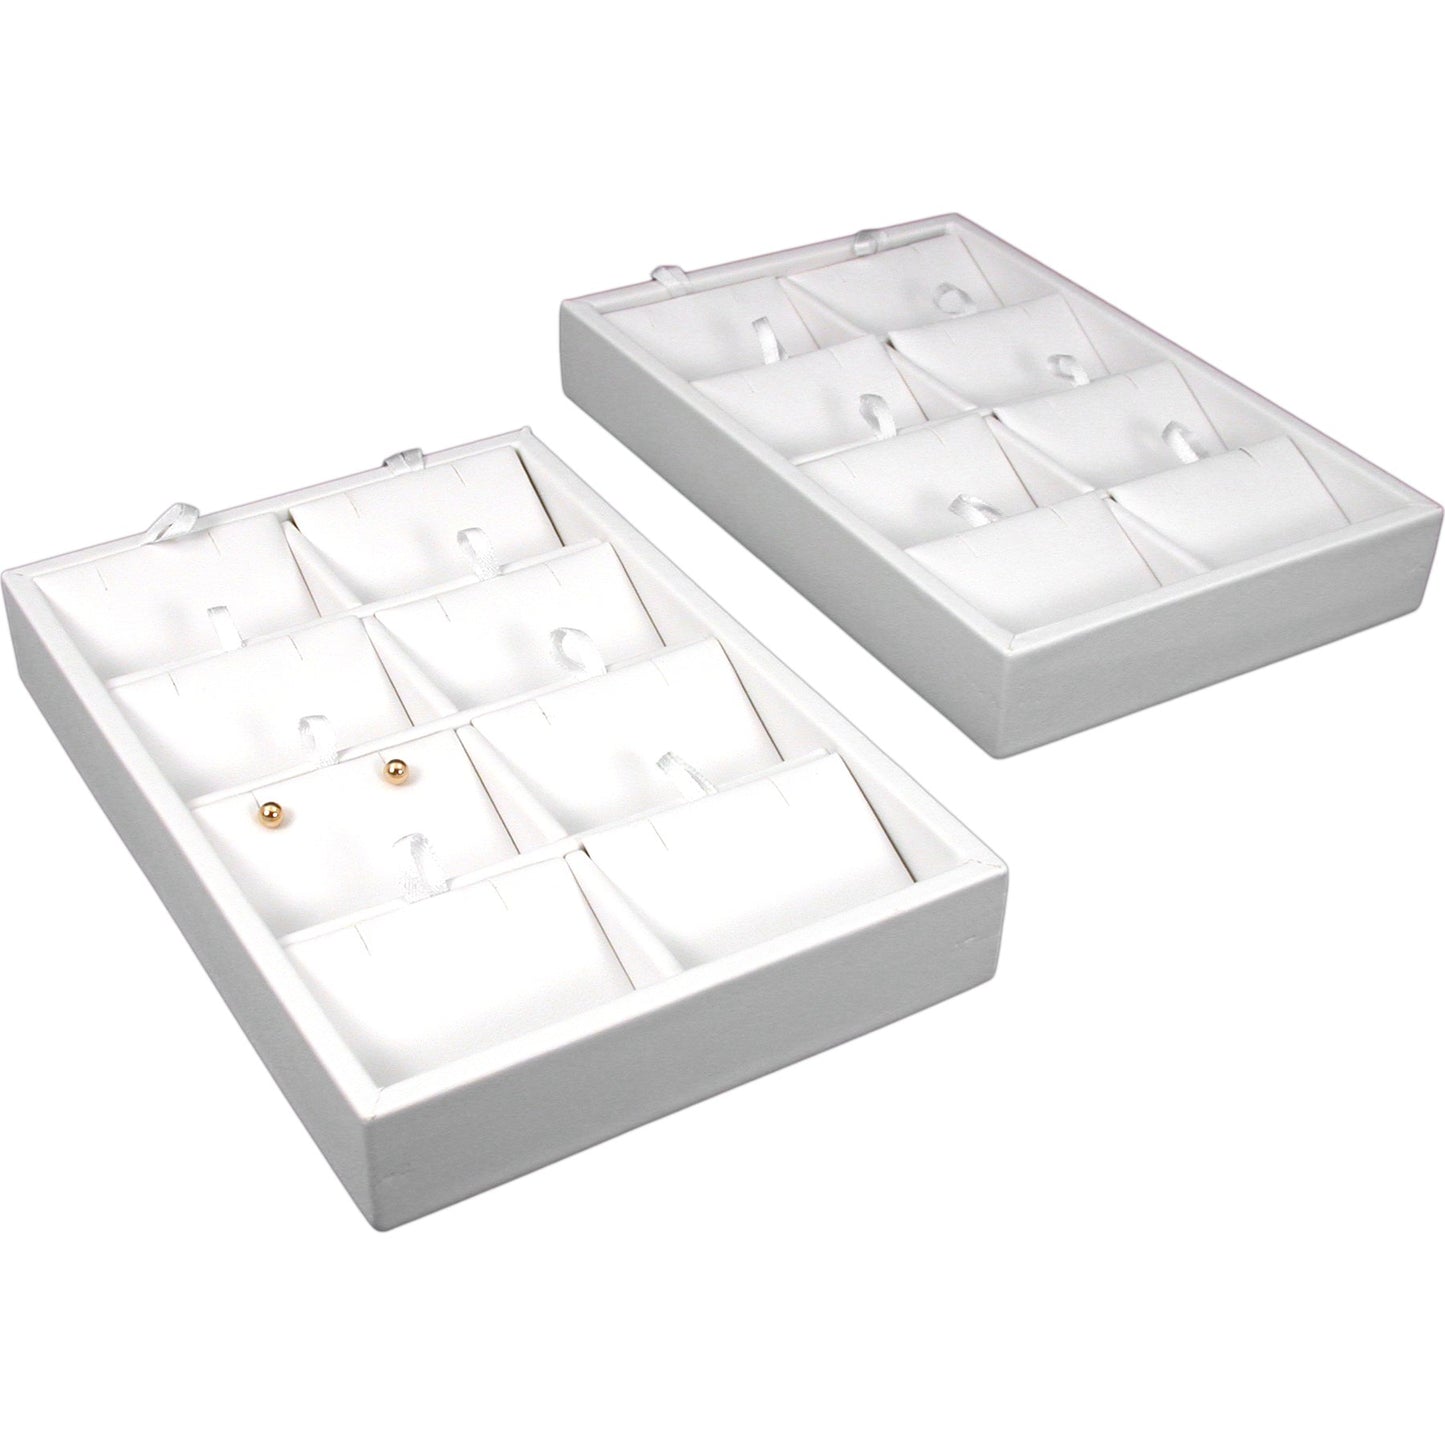 2 White Leather 8 Slot Pendant Trays Jewelry Displays